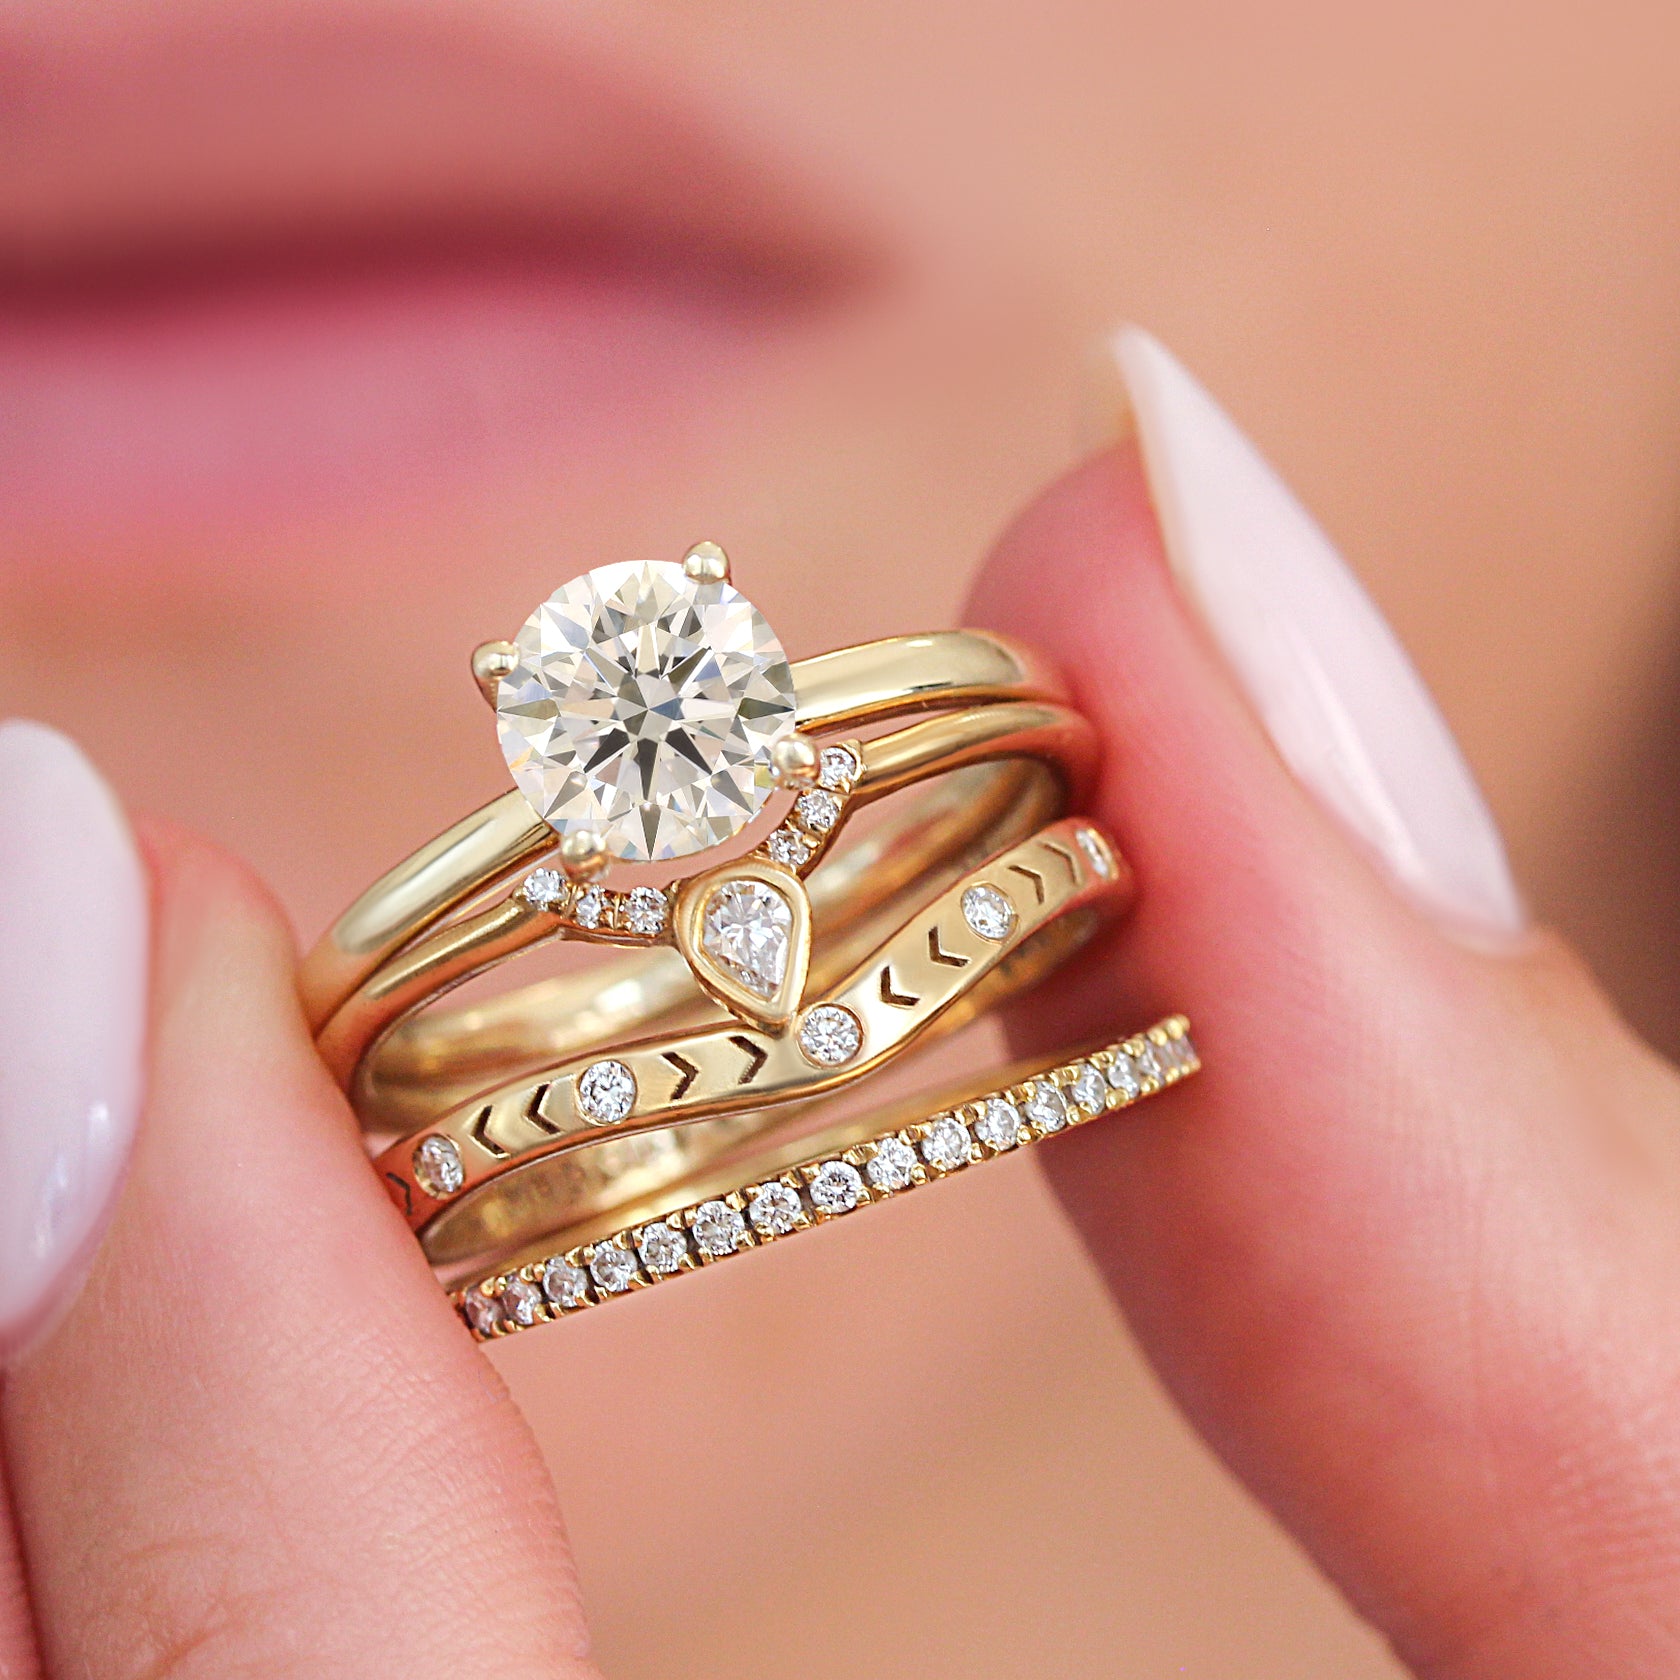 stylish wedding diamond rings, yellow gold